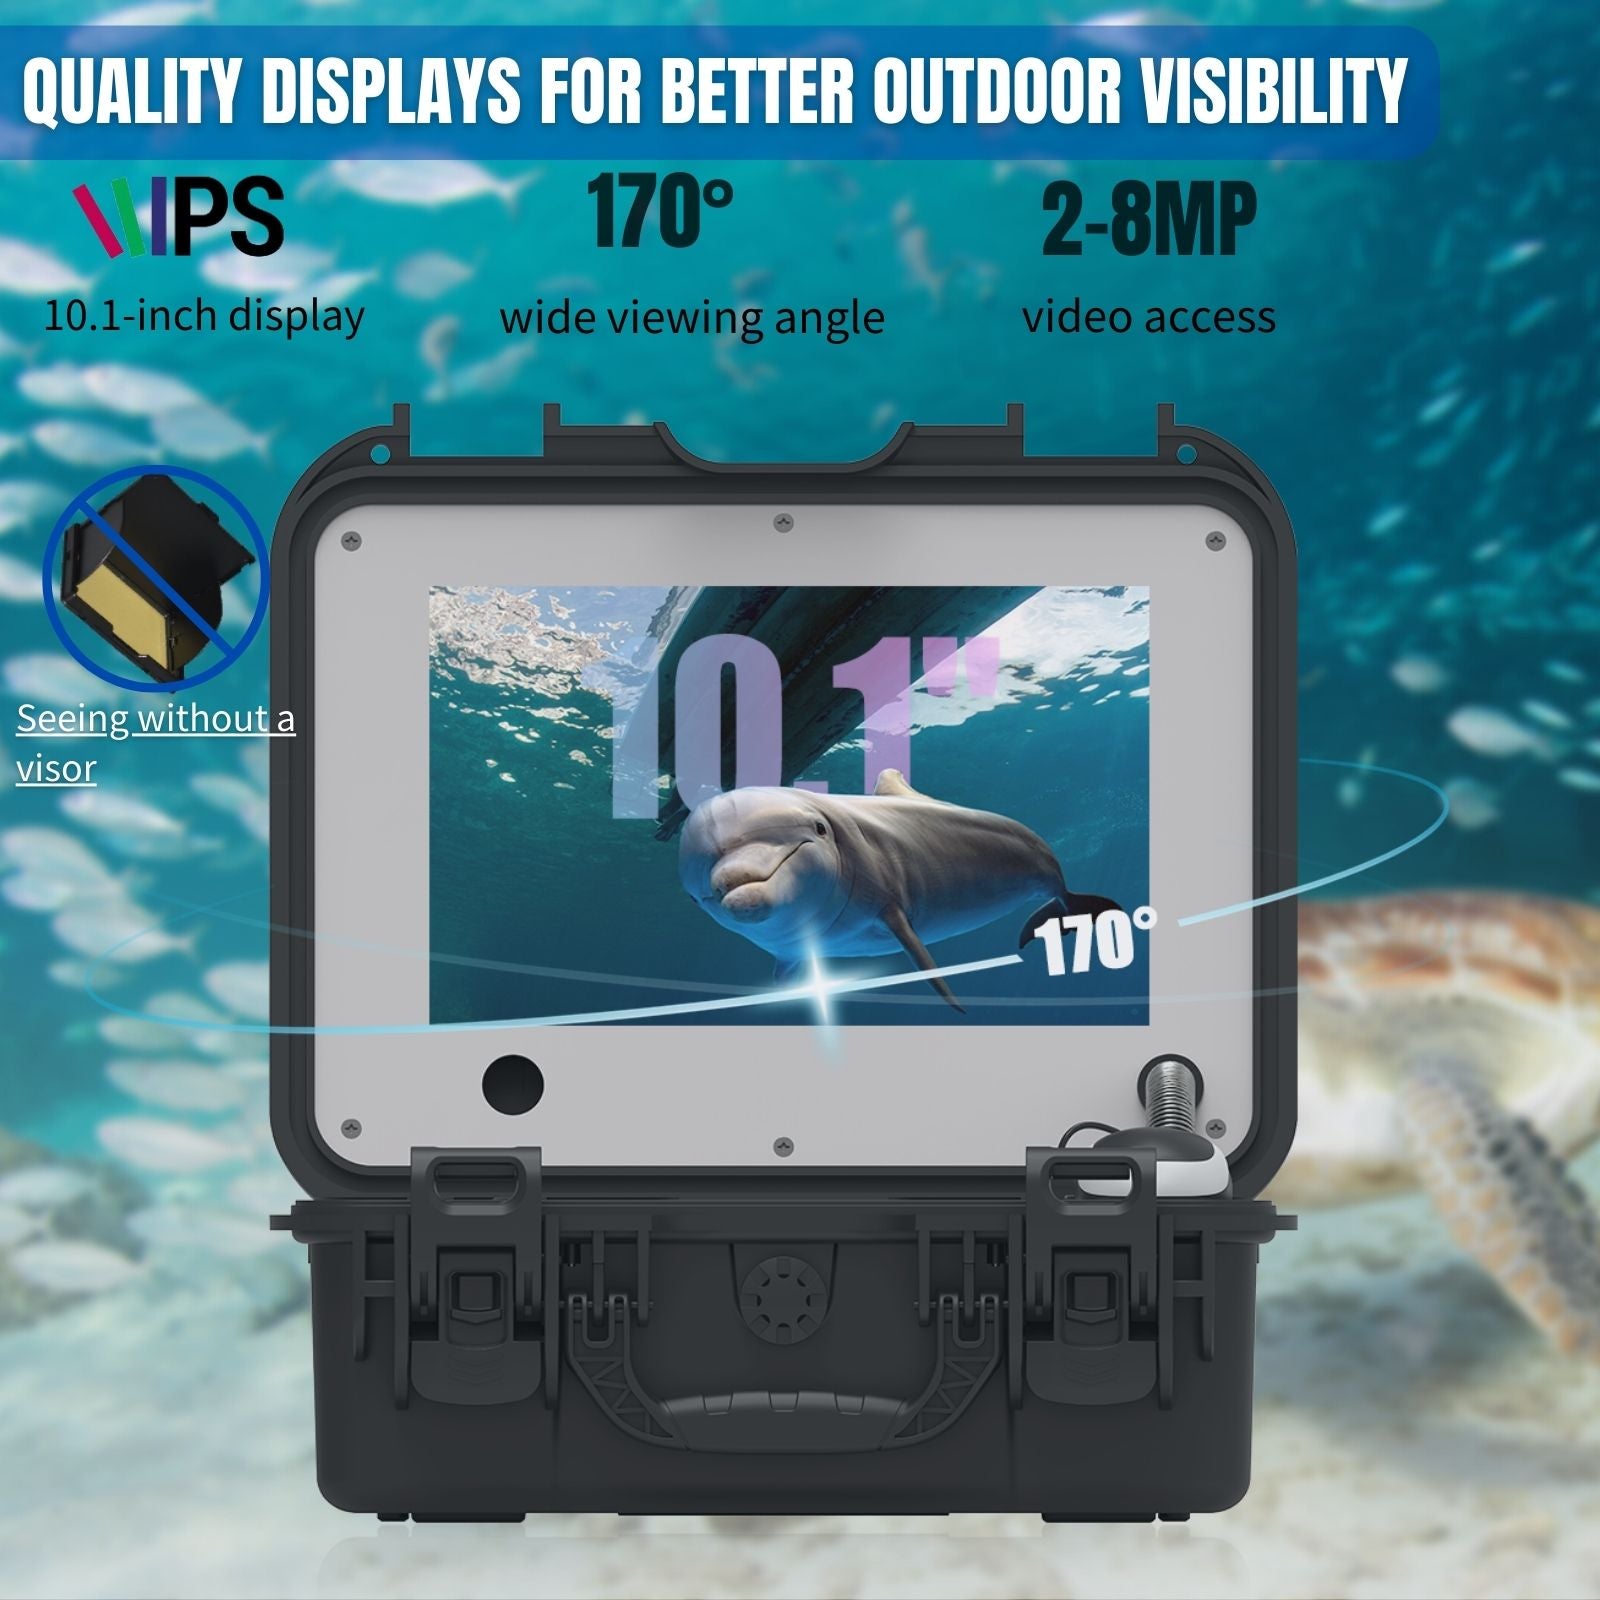 Underwater Fishing Camera 360° Rotating View Waterproof Video